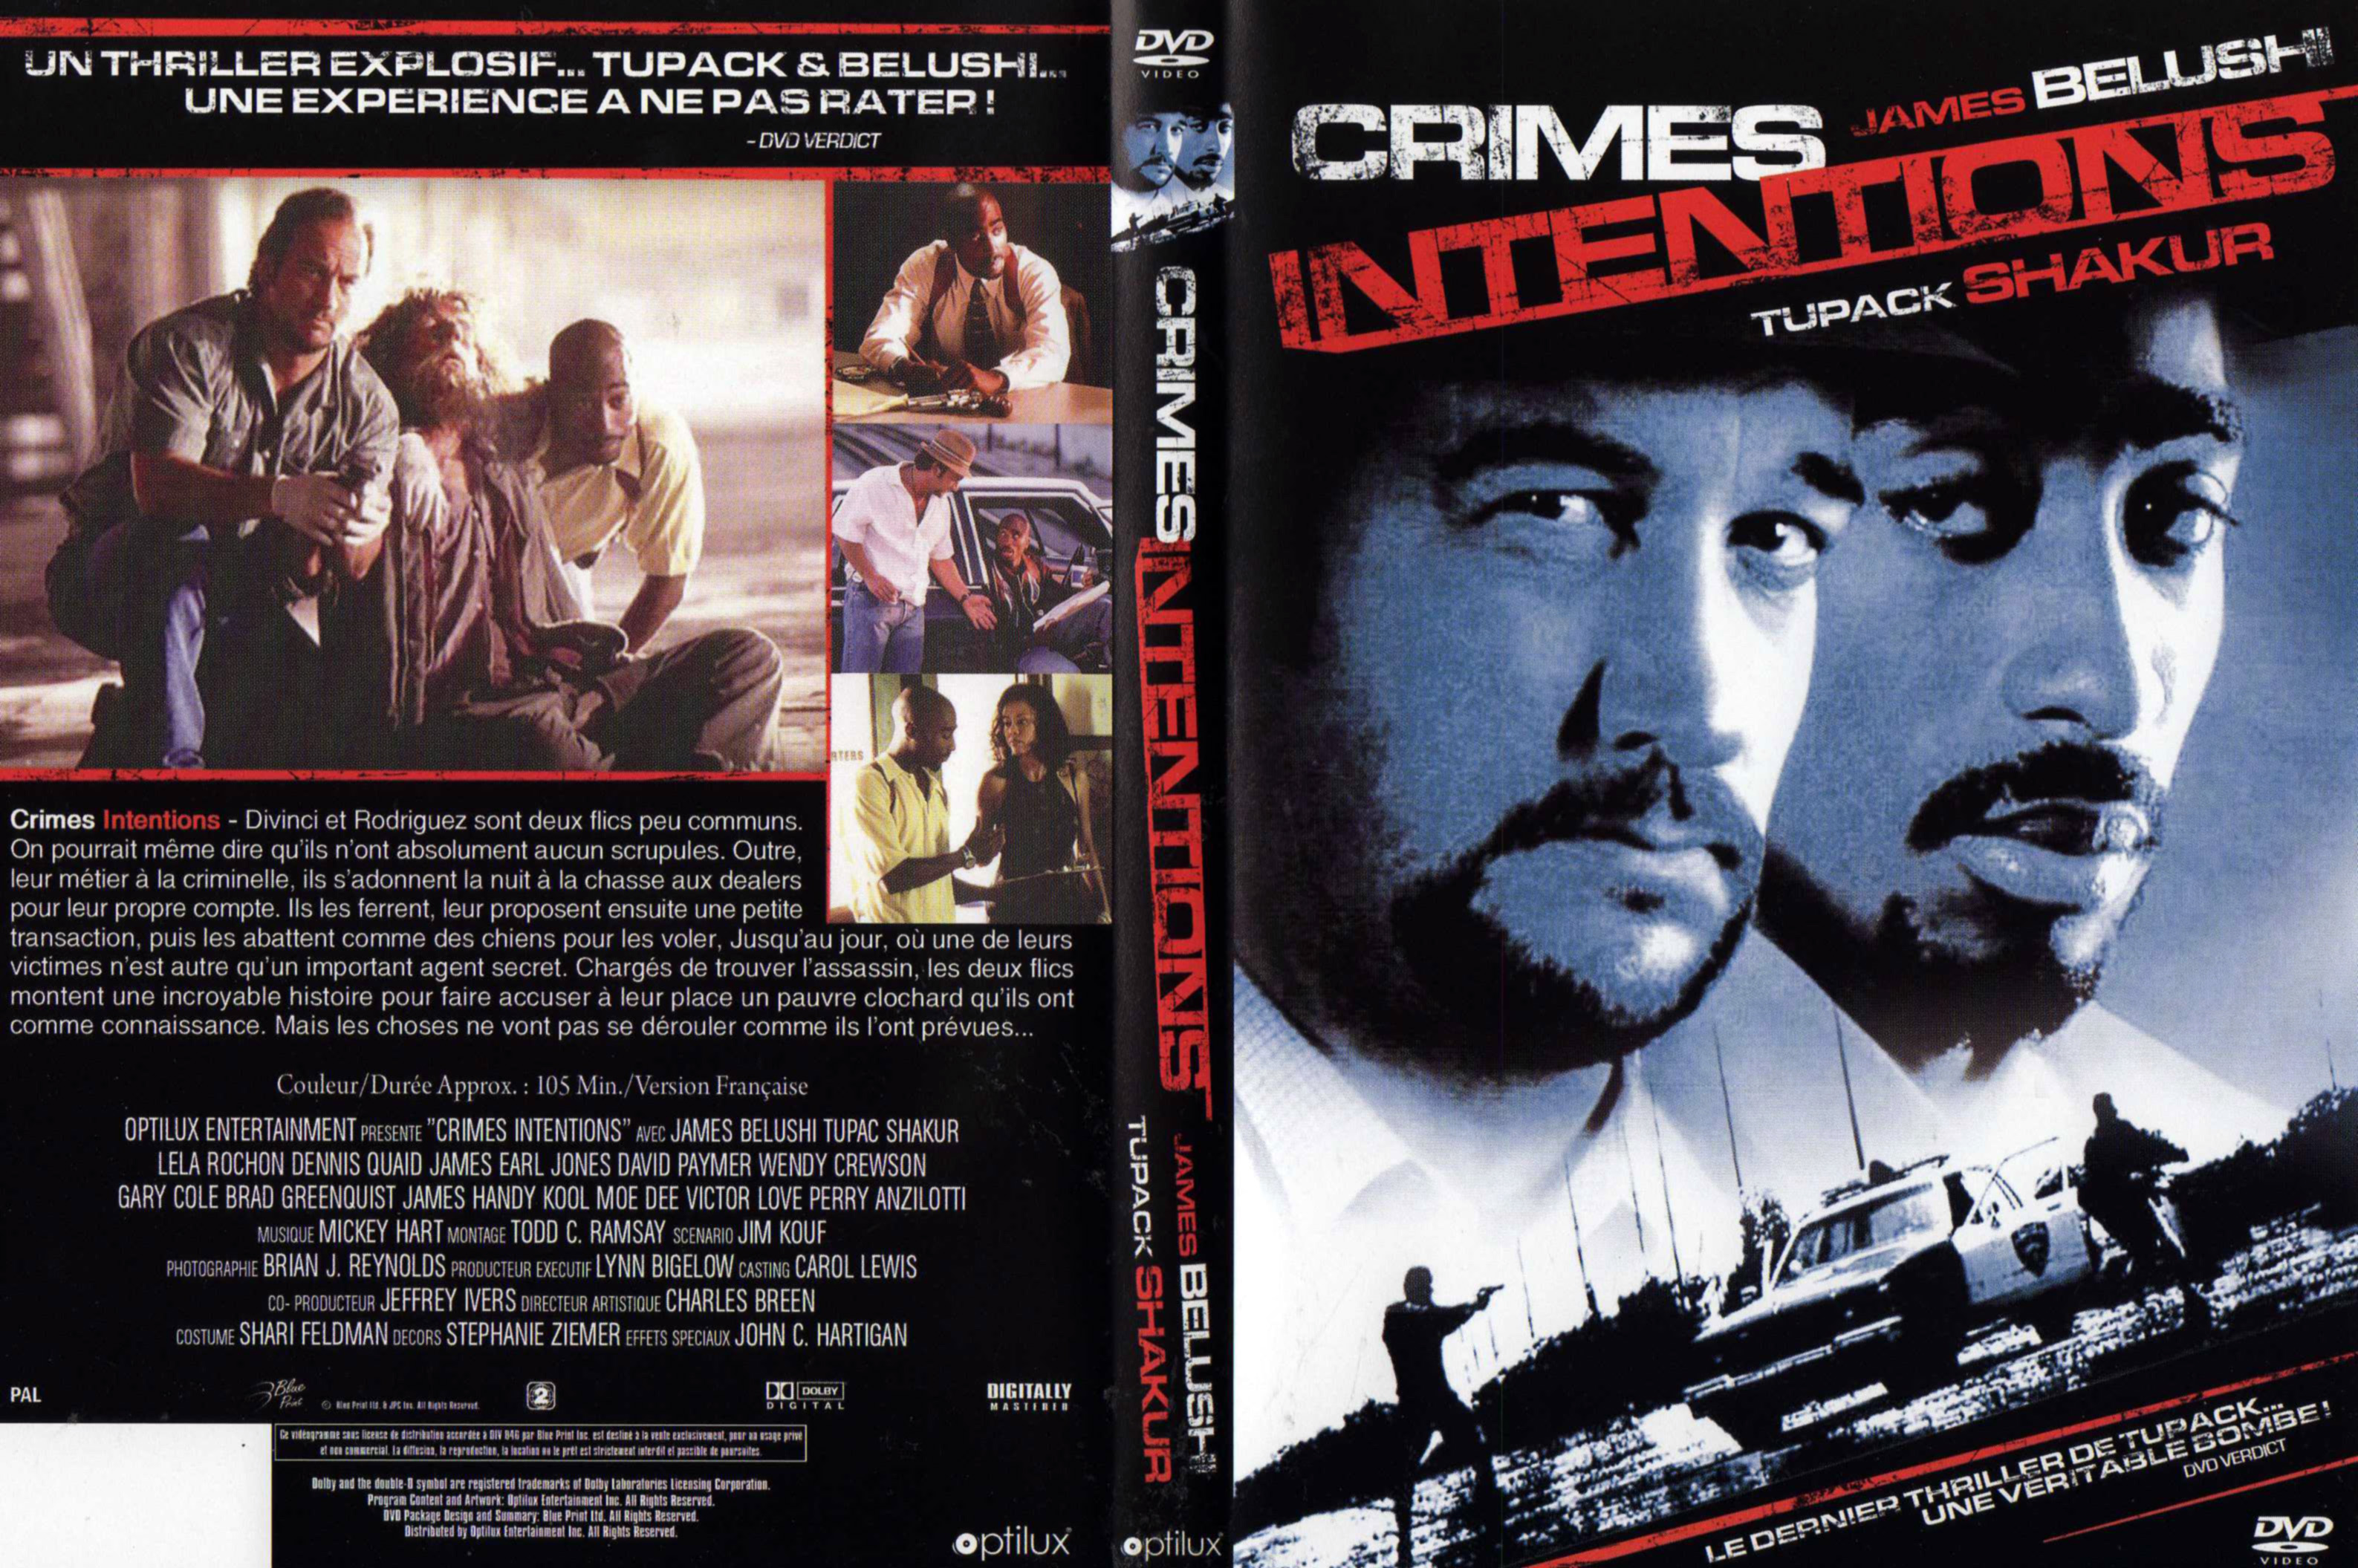 Jaquette DVD Crimes intentions